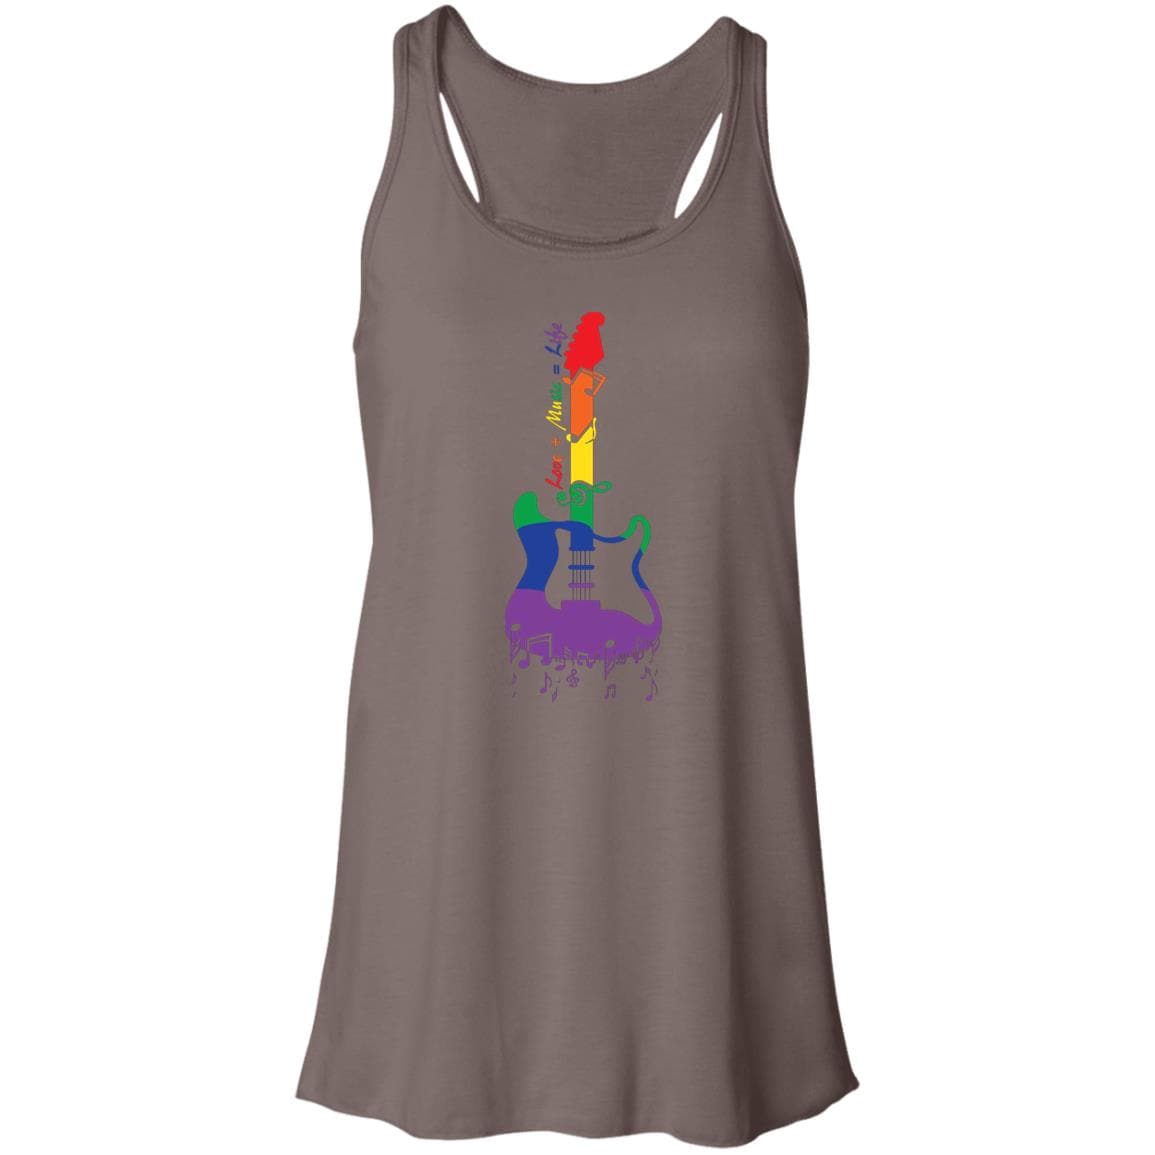 Rainbow Guitar "Love + Music = Life" Pride T Shirt - PrideBooth